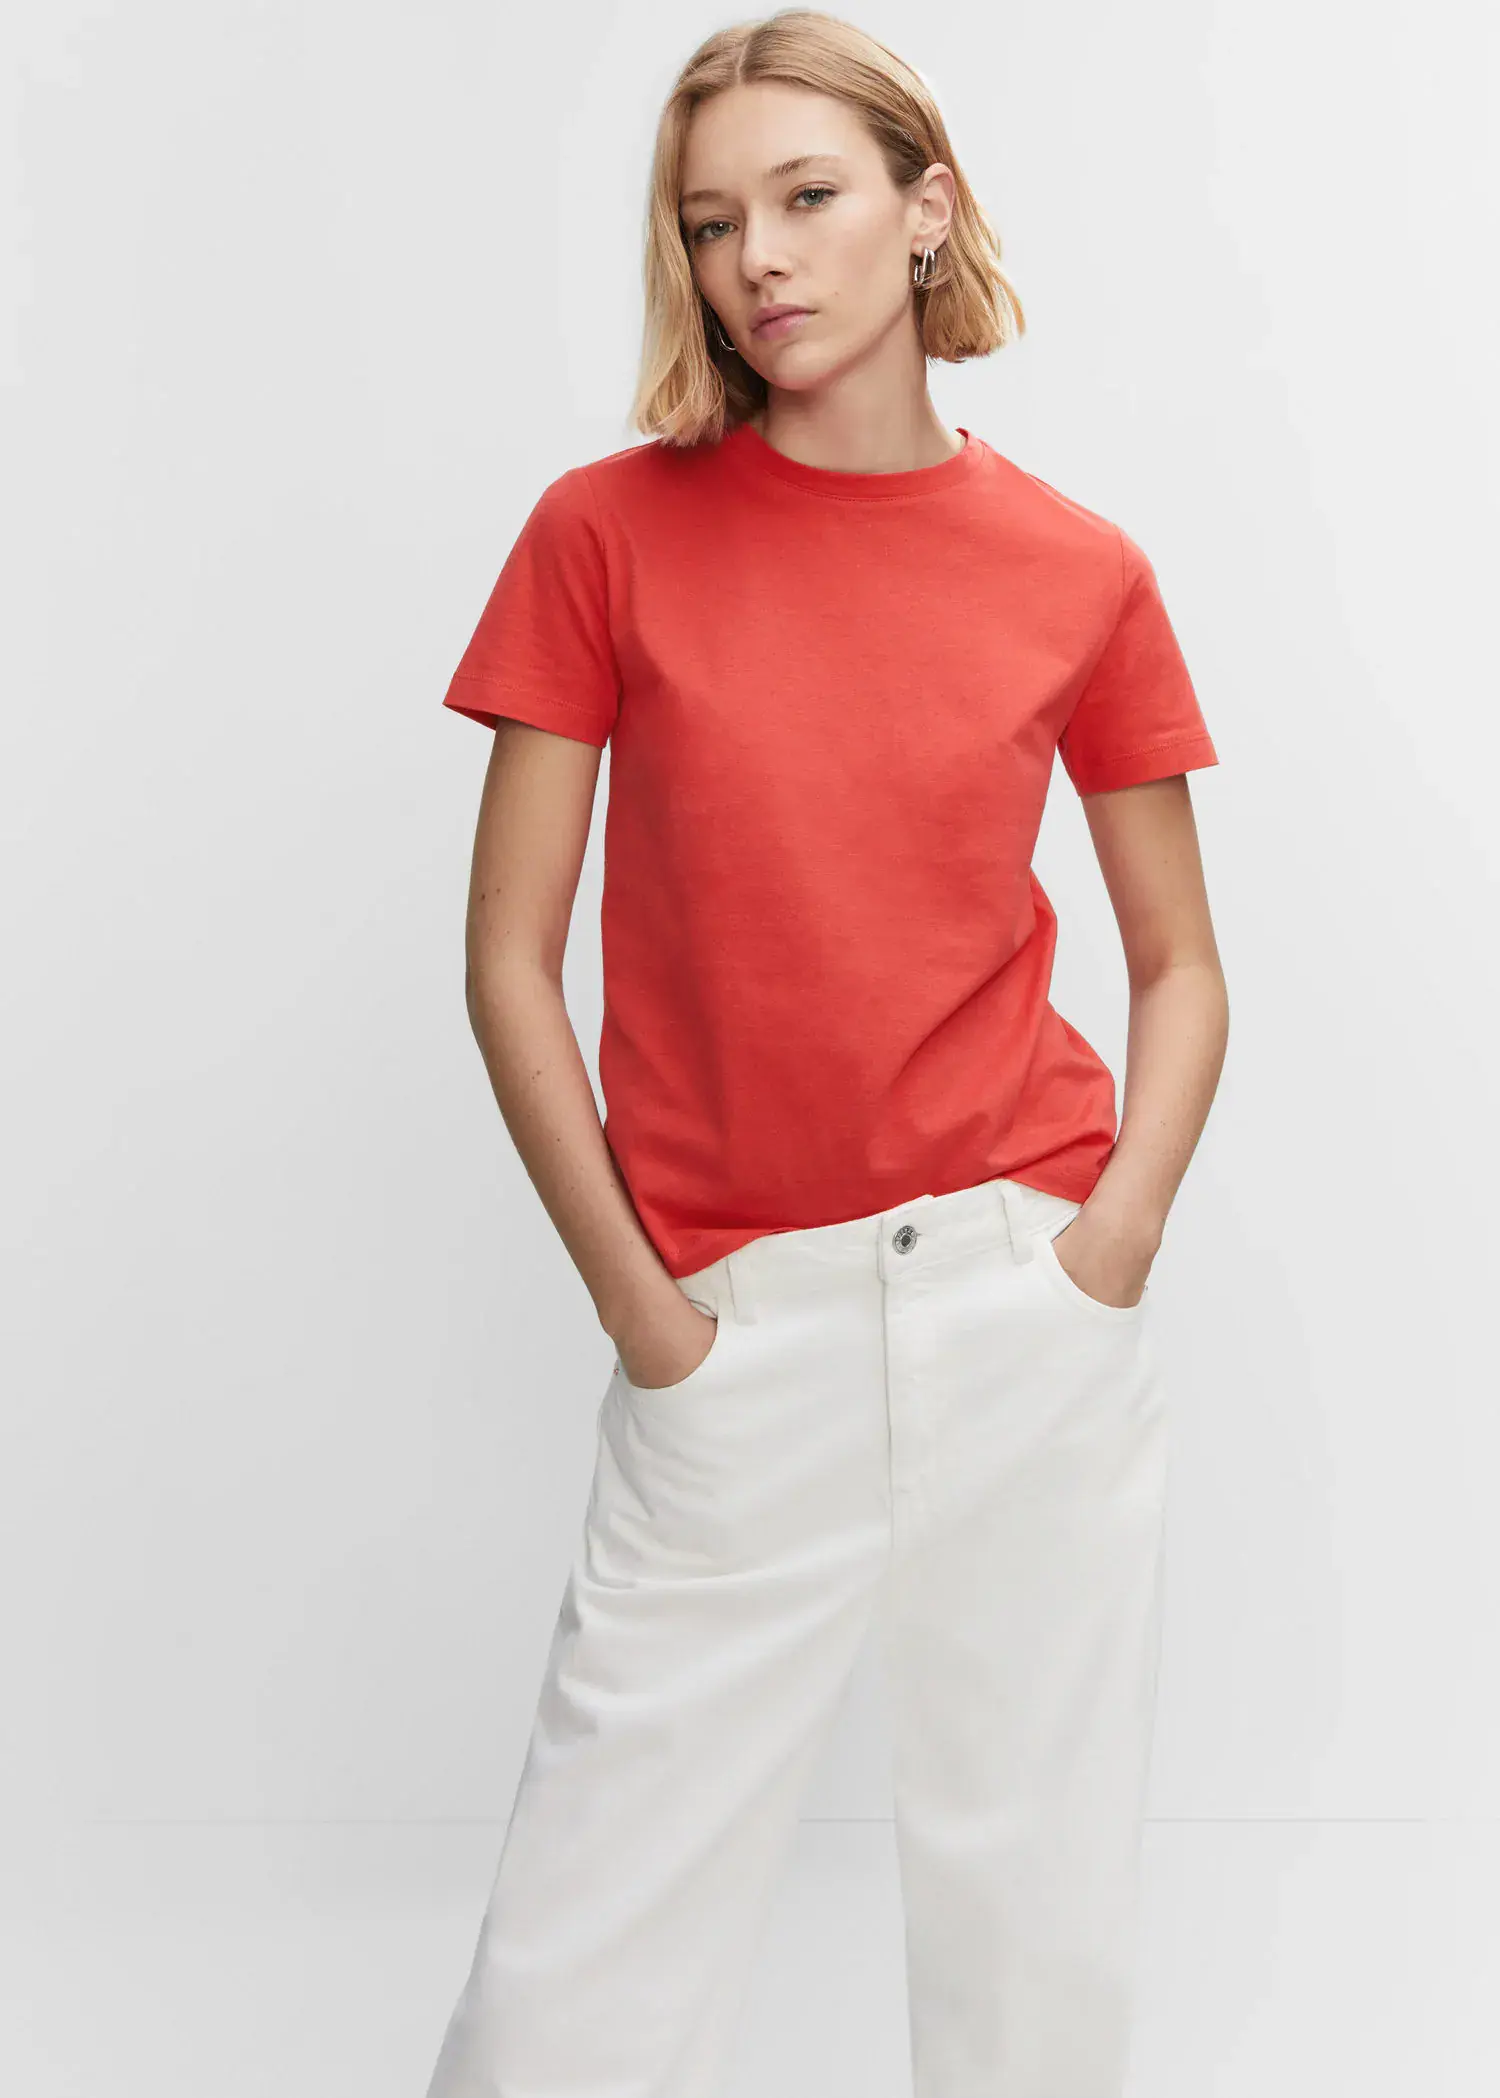 Mango 100% cotton T-shirt. a woman wearing a red shirt and white skirt. 